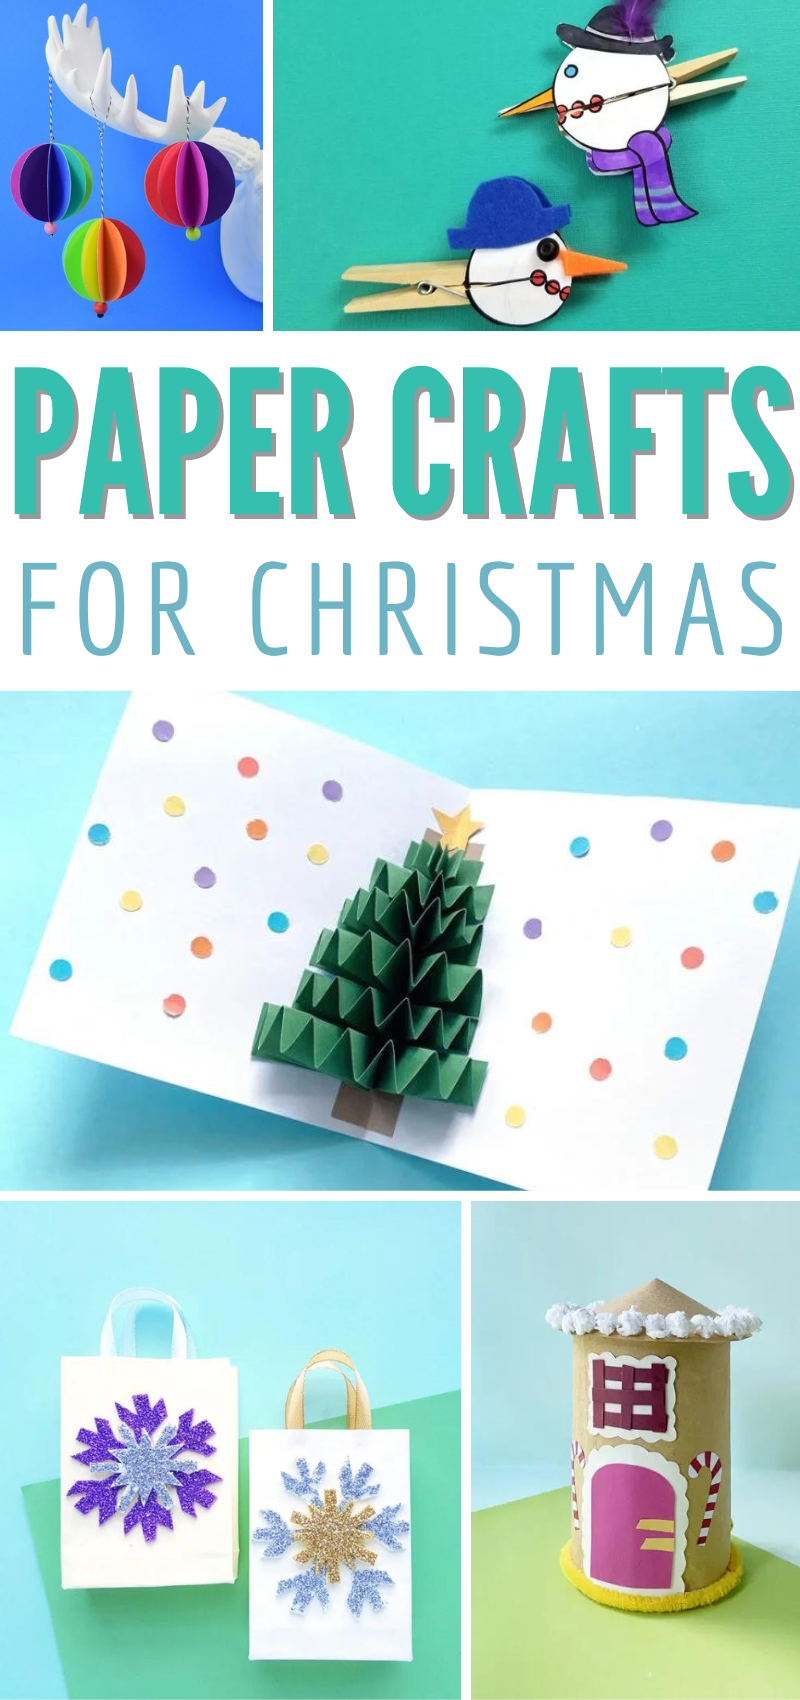 Hello Santa Christmas Wrap Crafting Mod Podge Paper Sheet_D